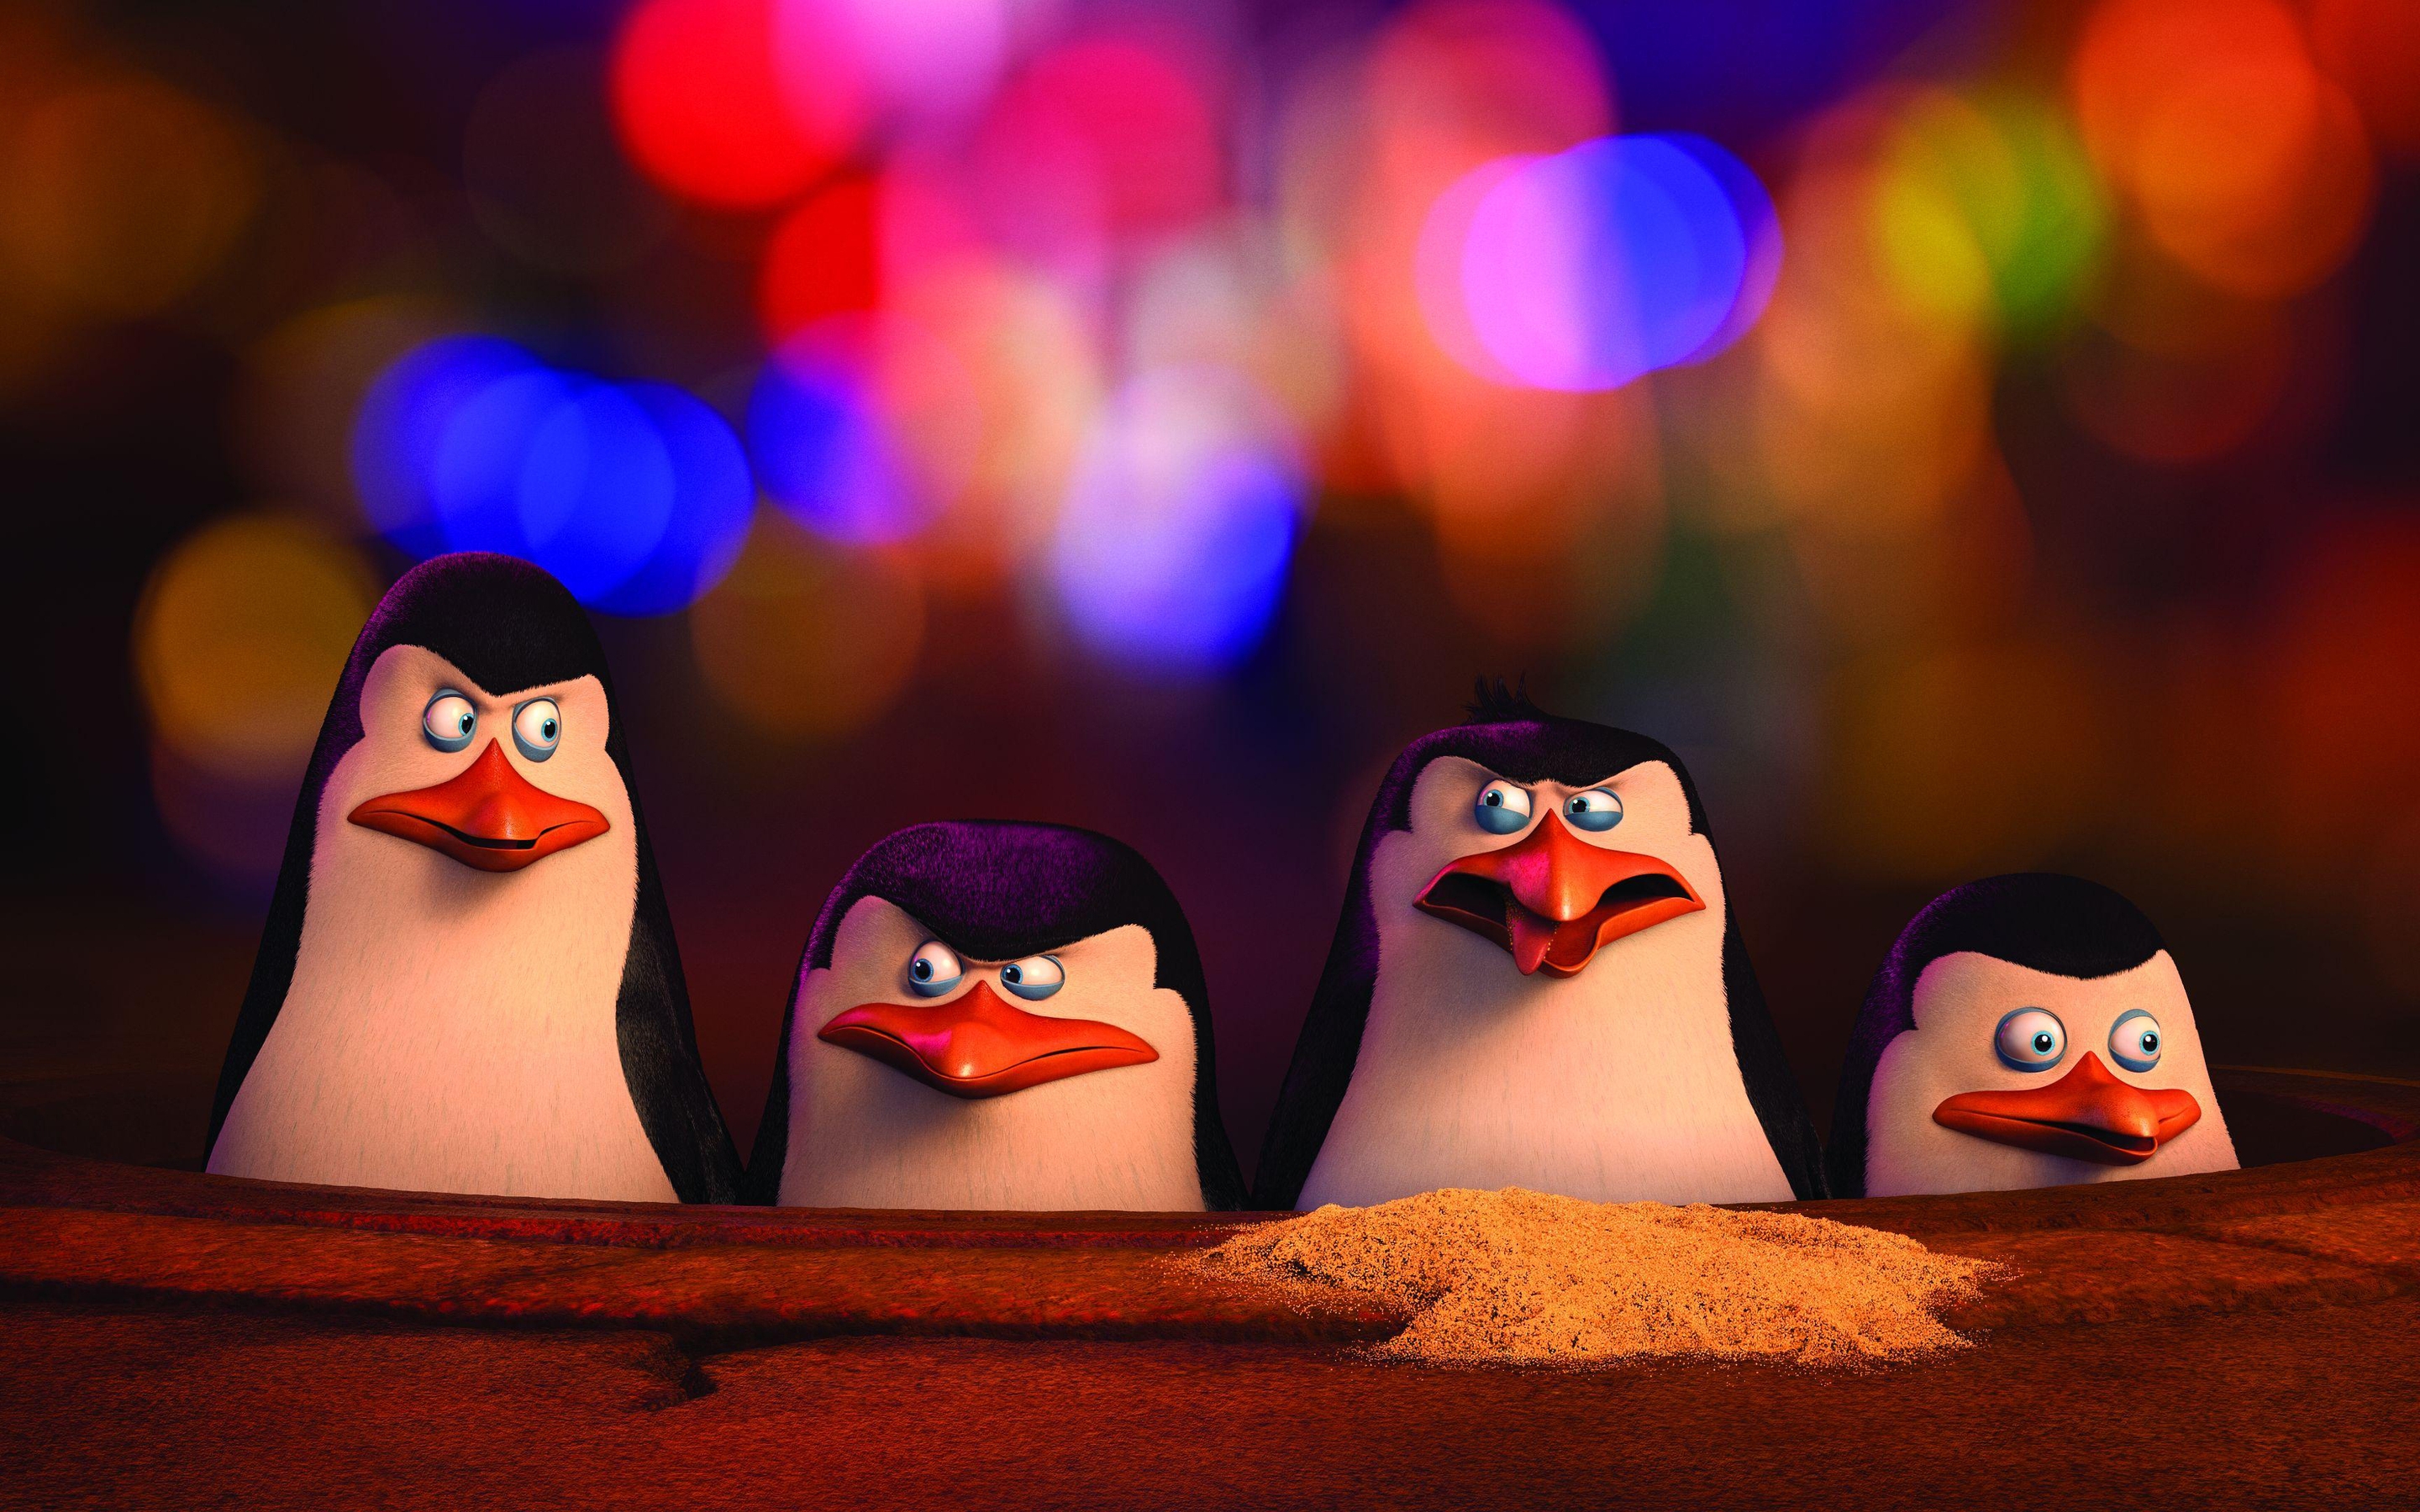 The Penguins of Madagascar Movie for 2880 x 1800 Retina Display resolution